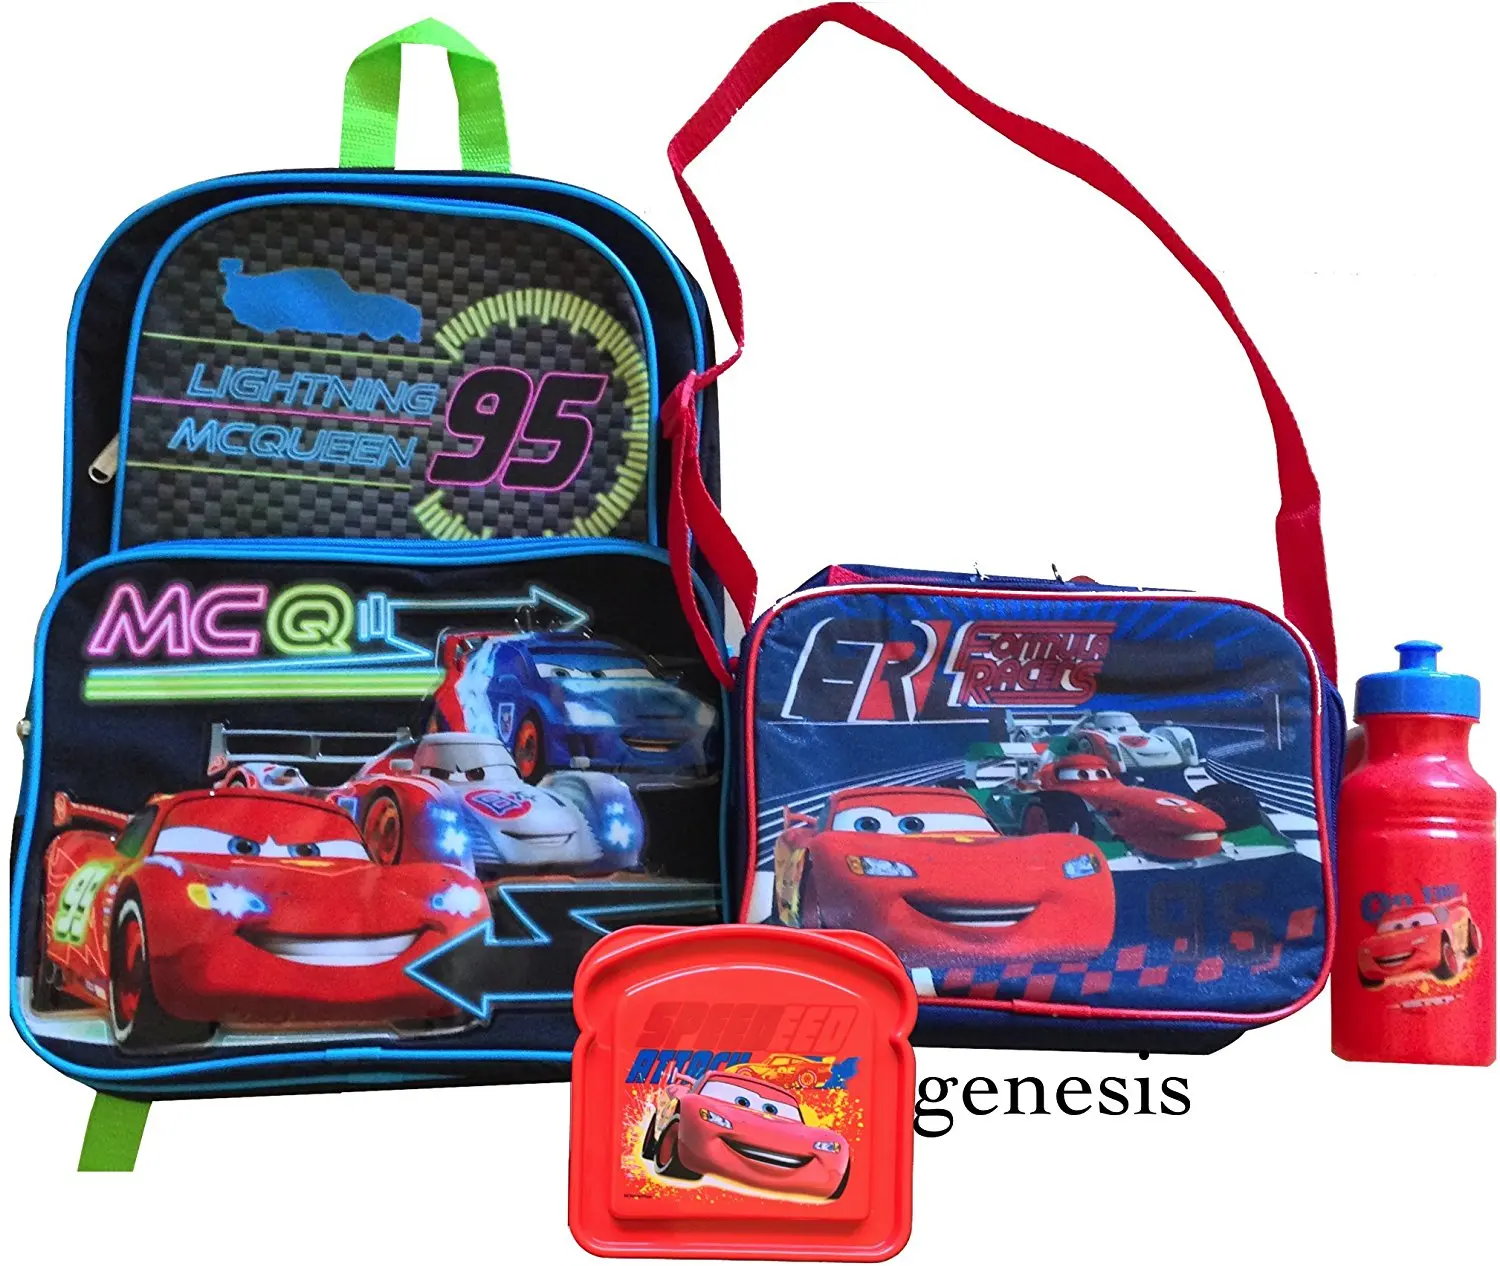 disney pixar cars backpack